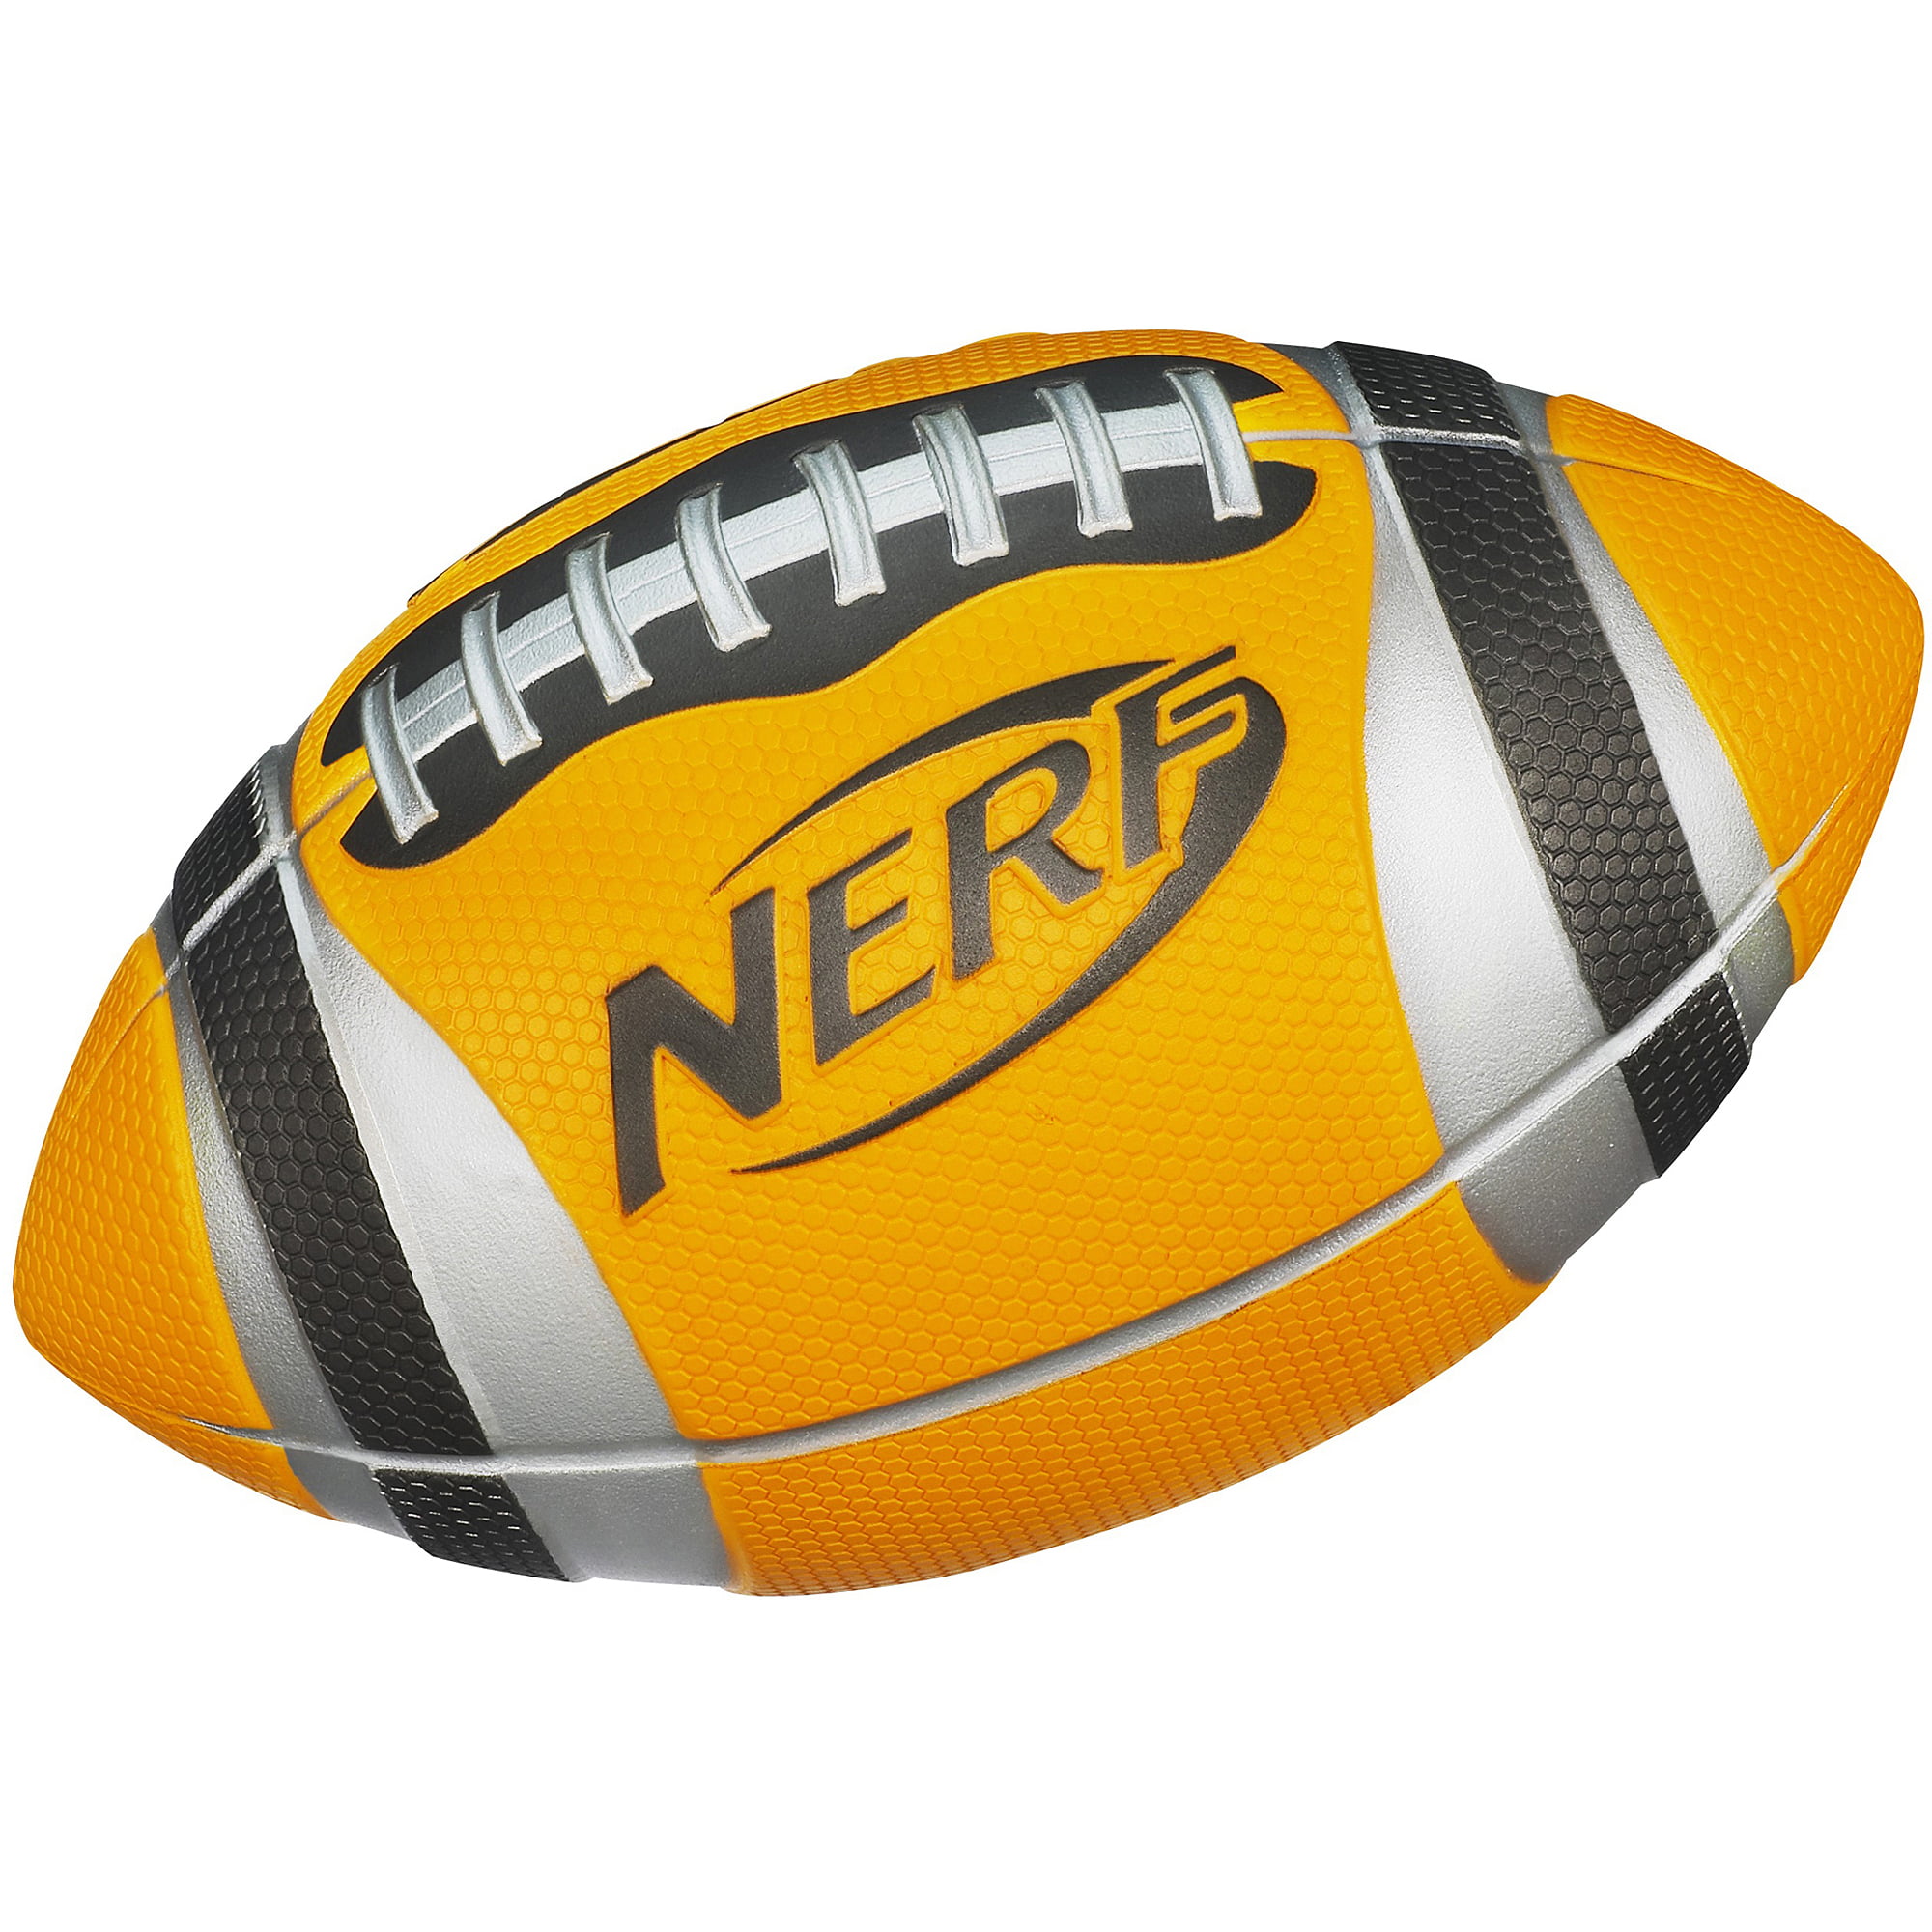 Nerf Pro Grip Football - Walmart.com